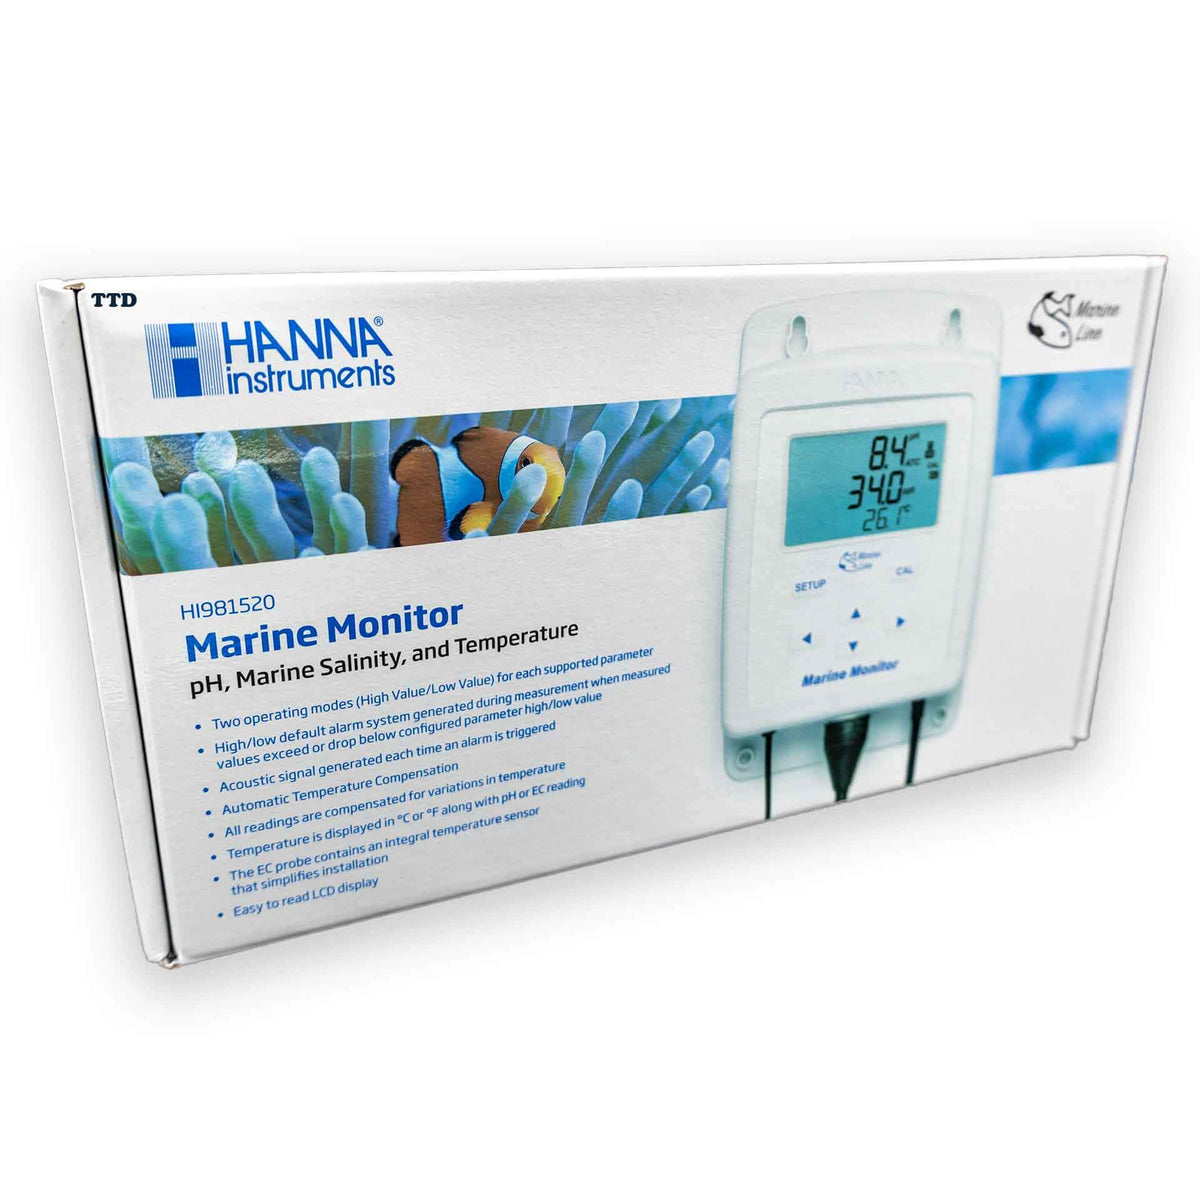 Hanna Marine pH, Marine Salinity, and Temperature Monitor - HI981520